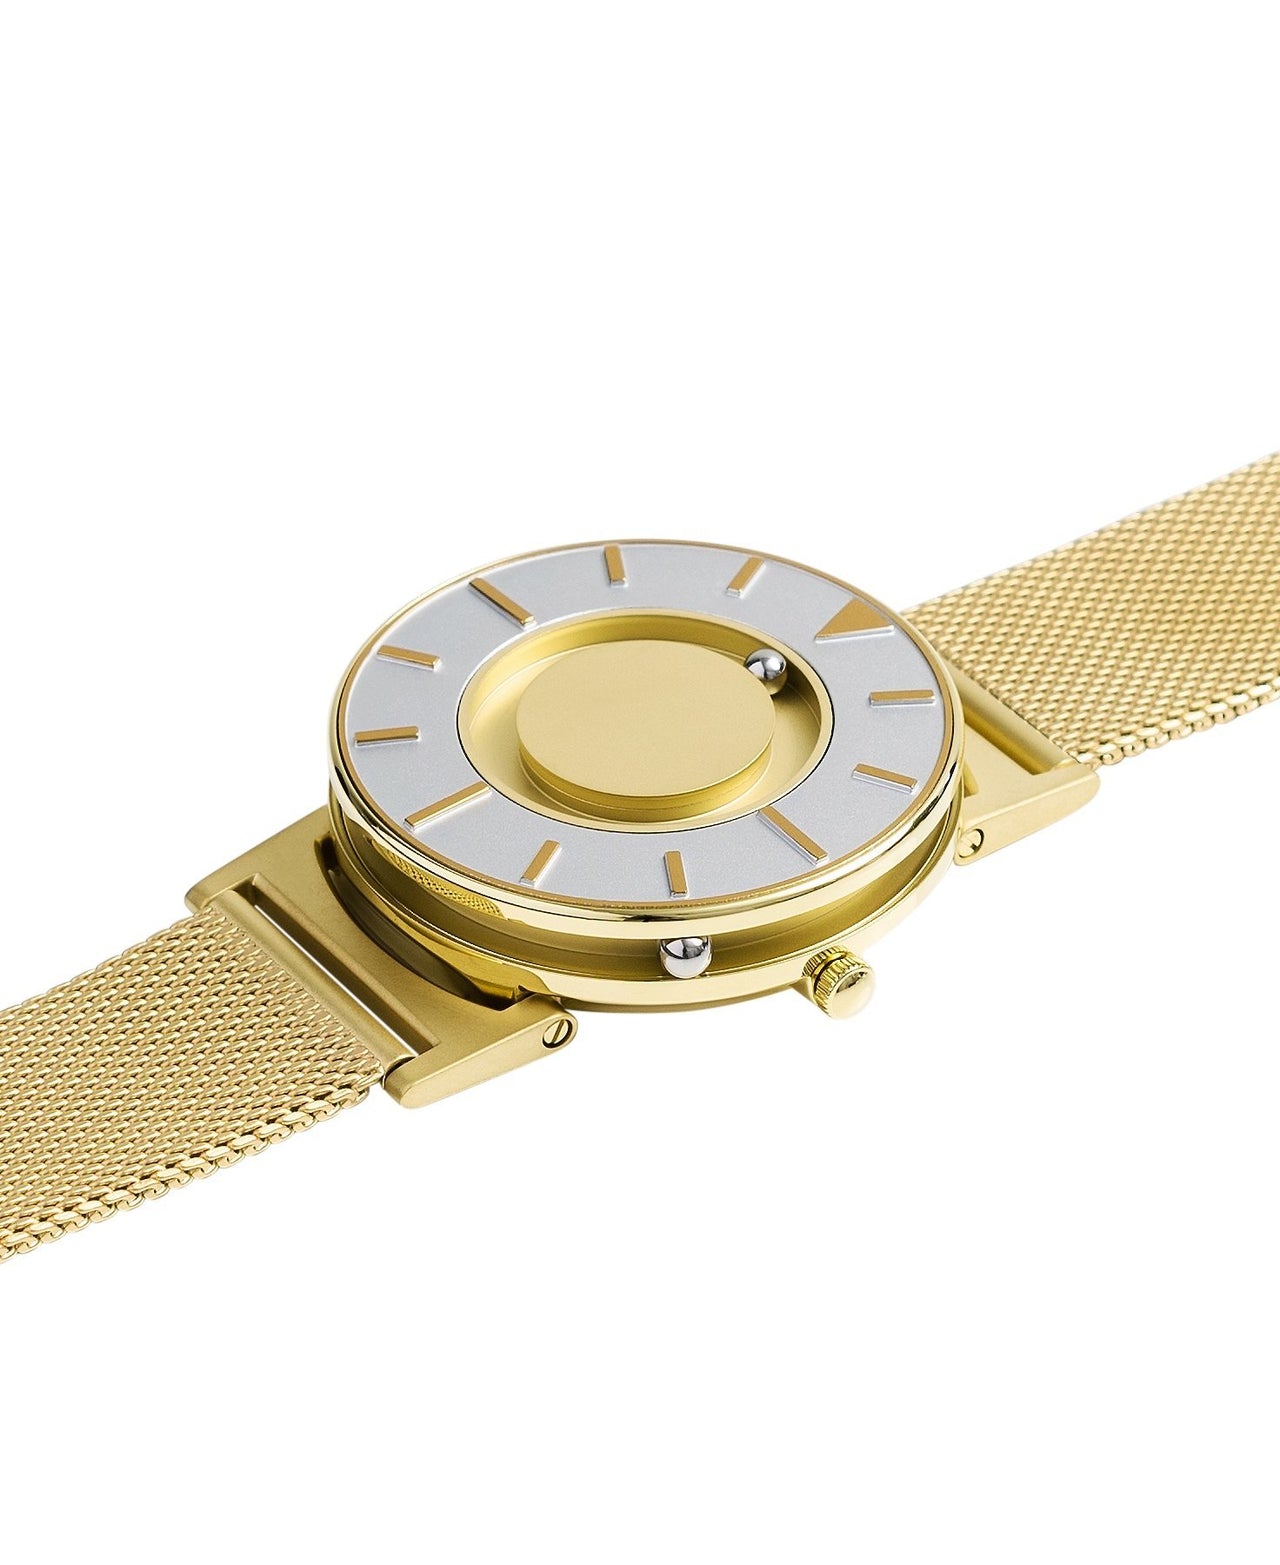 Eone Bradley Gold Mesh - Watches & Crystals